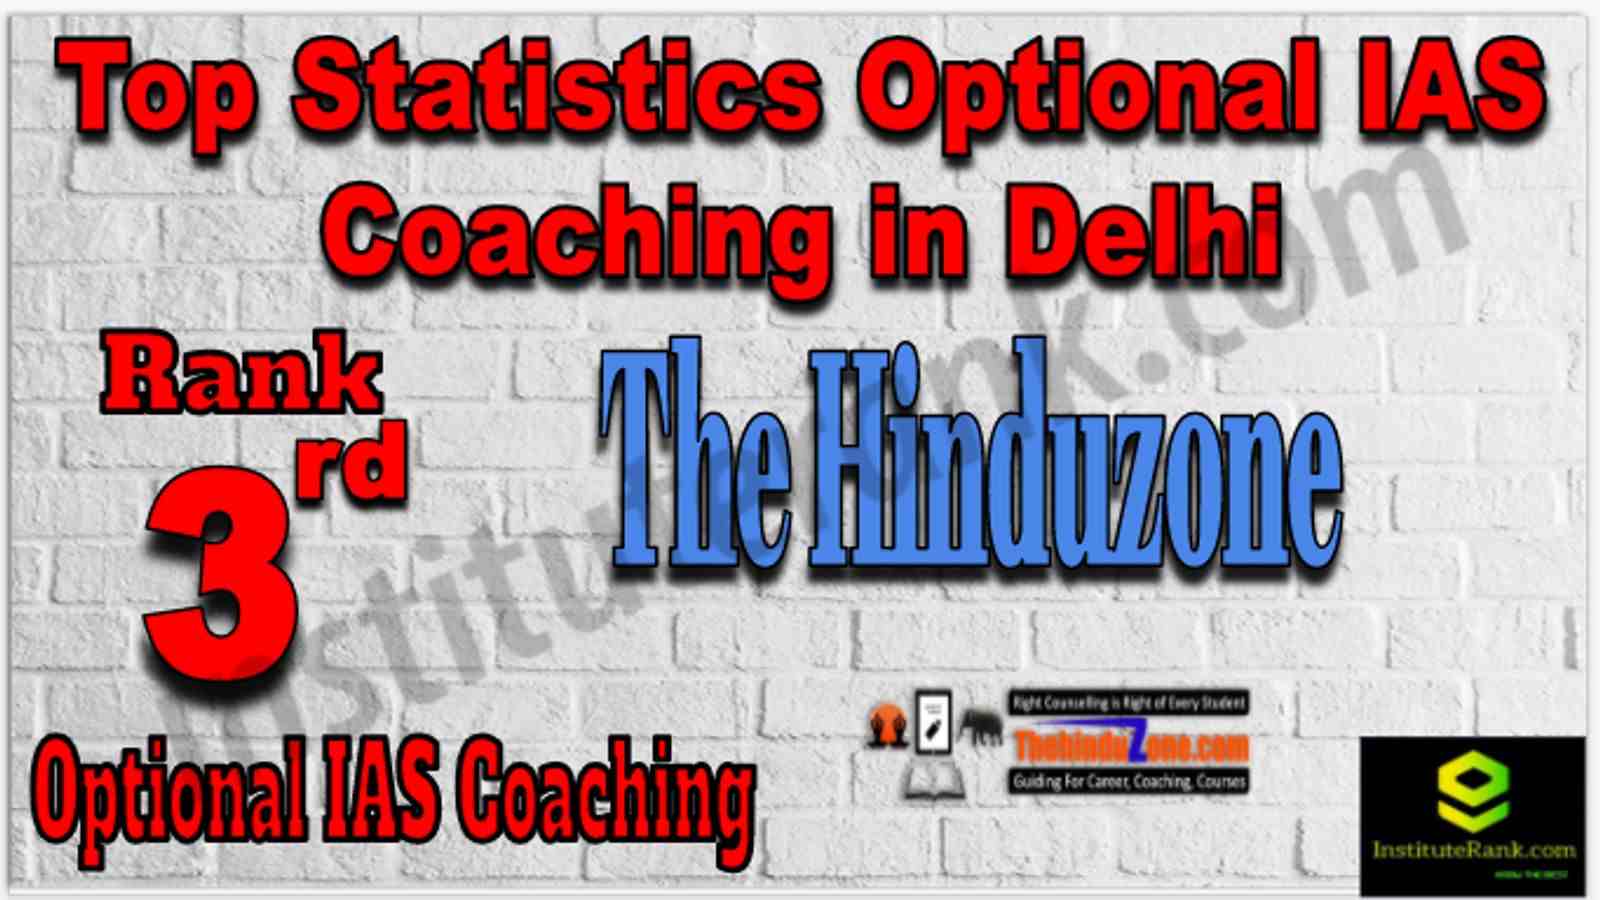 Rank 3 Top Statistics Optional IAS Coaching in Delhi